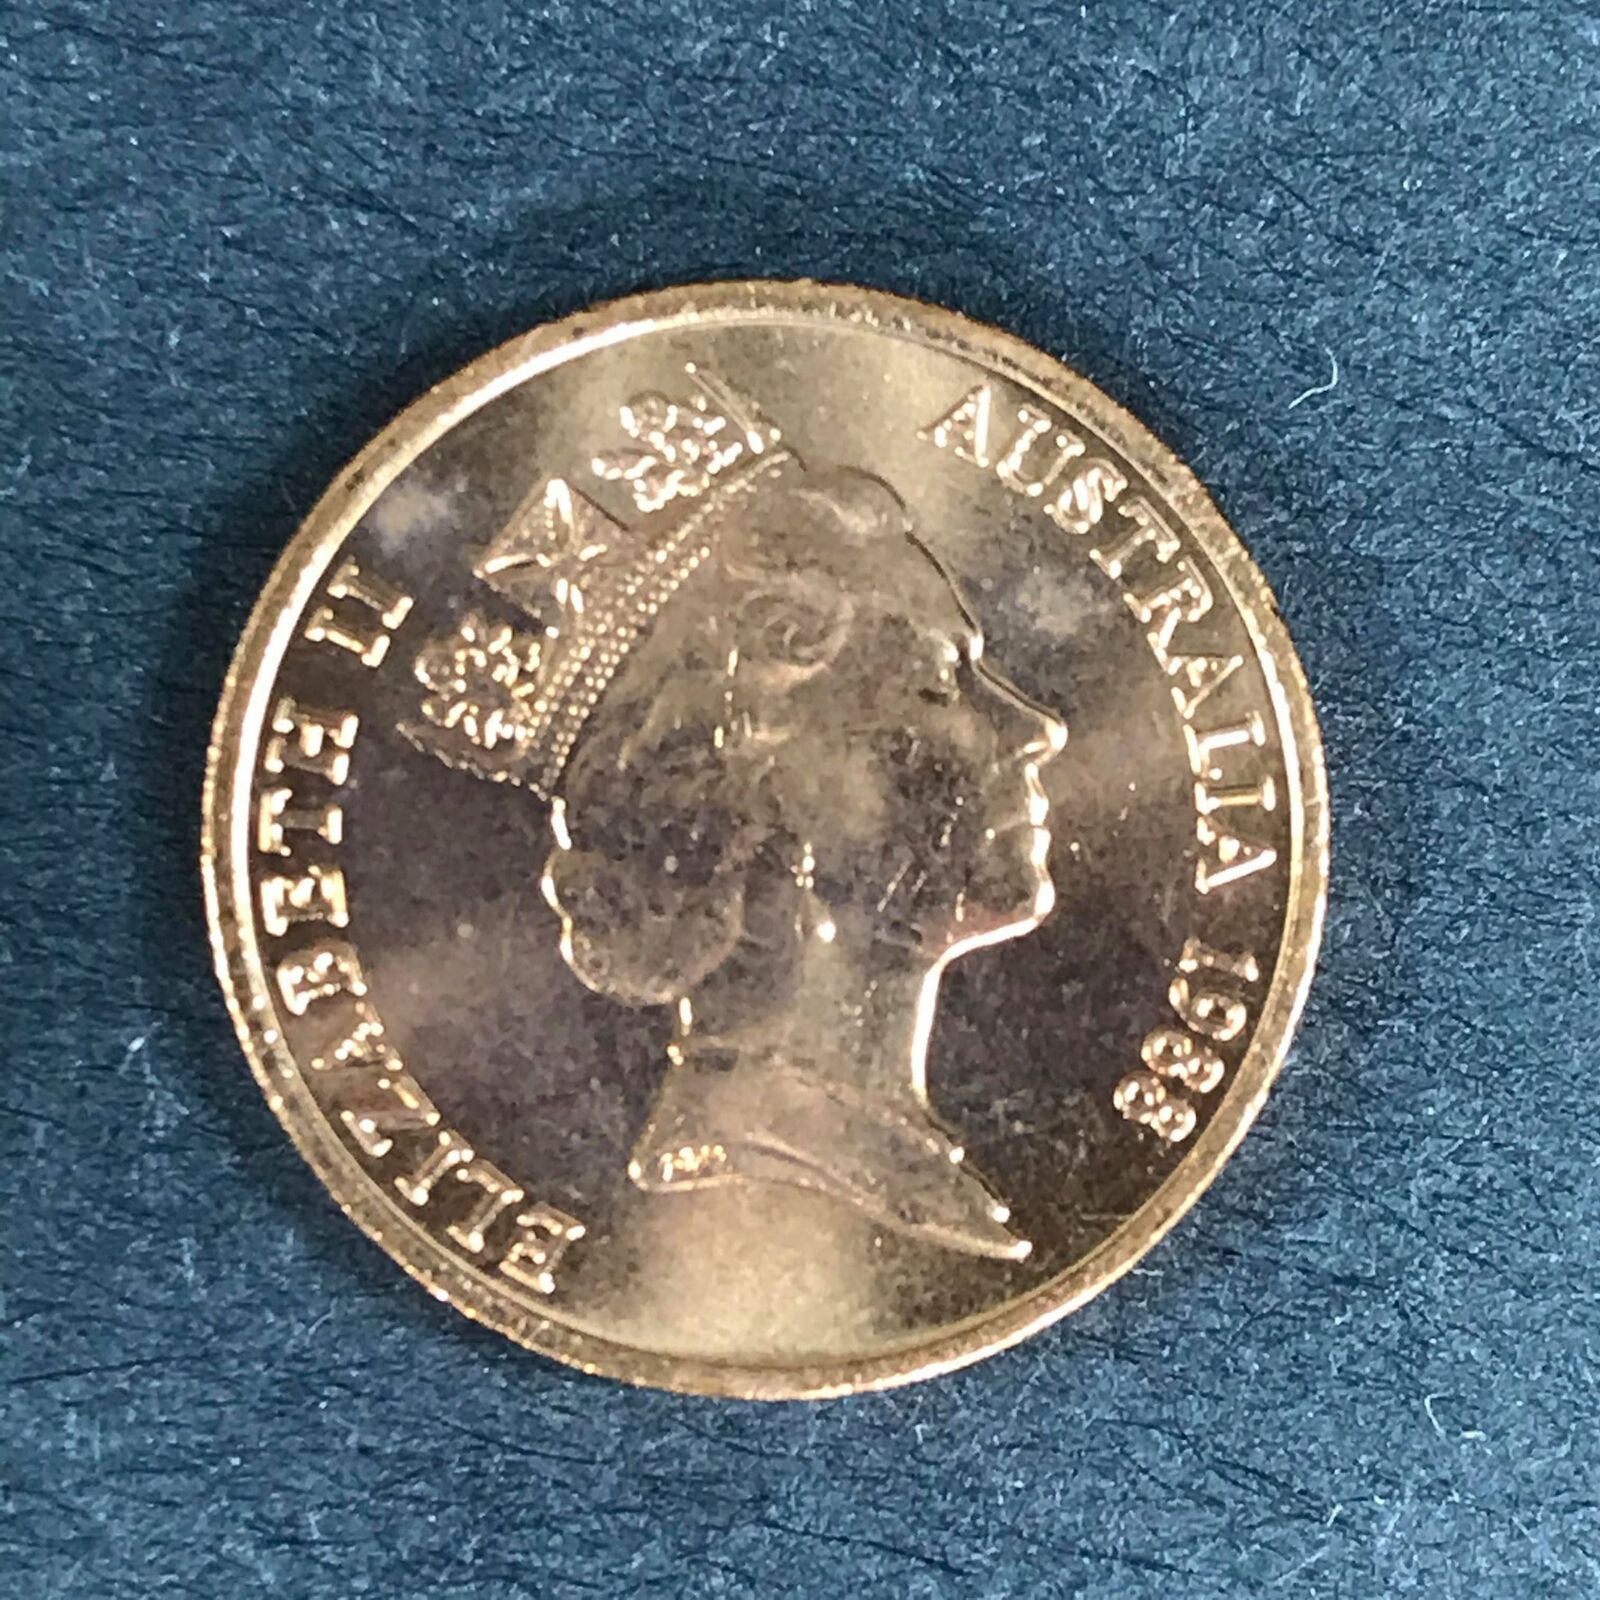 1 x 1988 Uncirculated 1c Royal Australian Mint